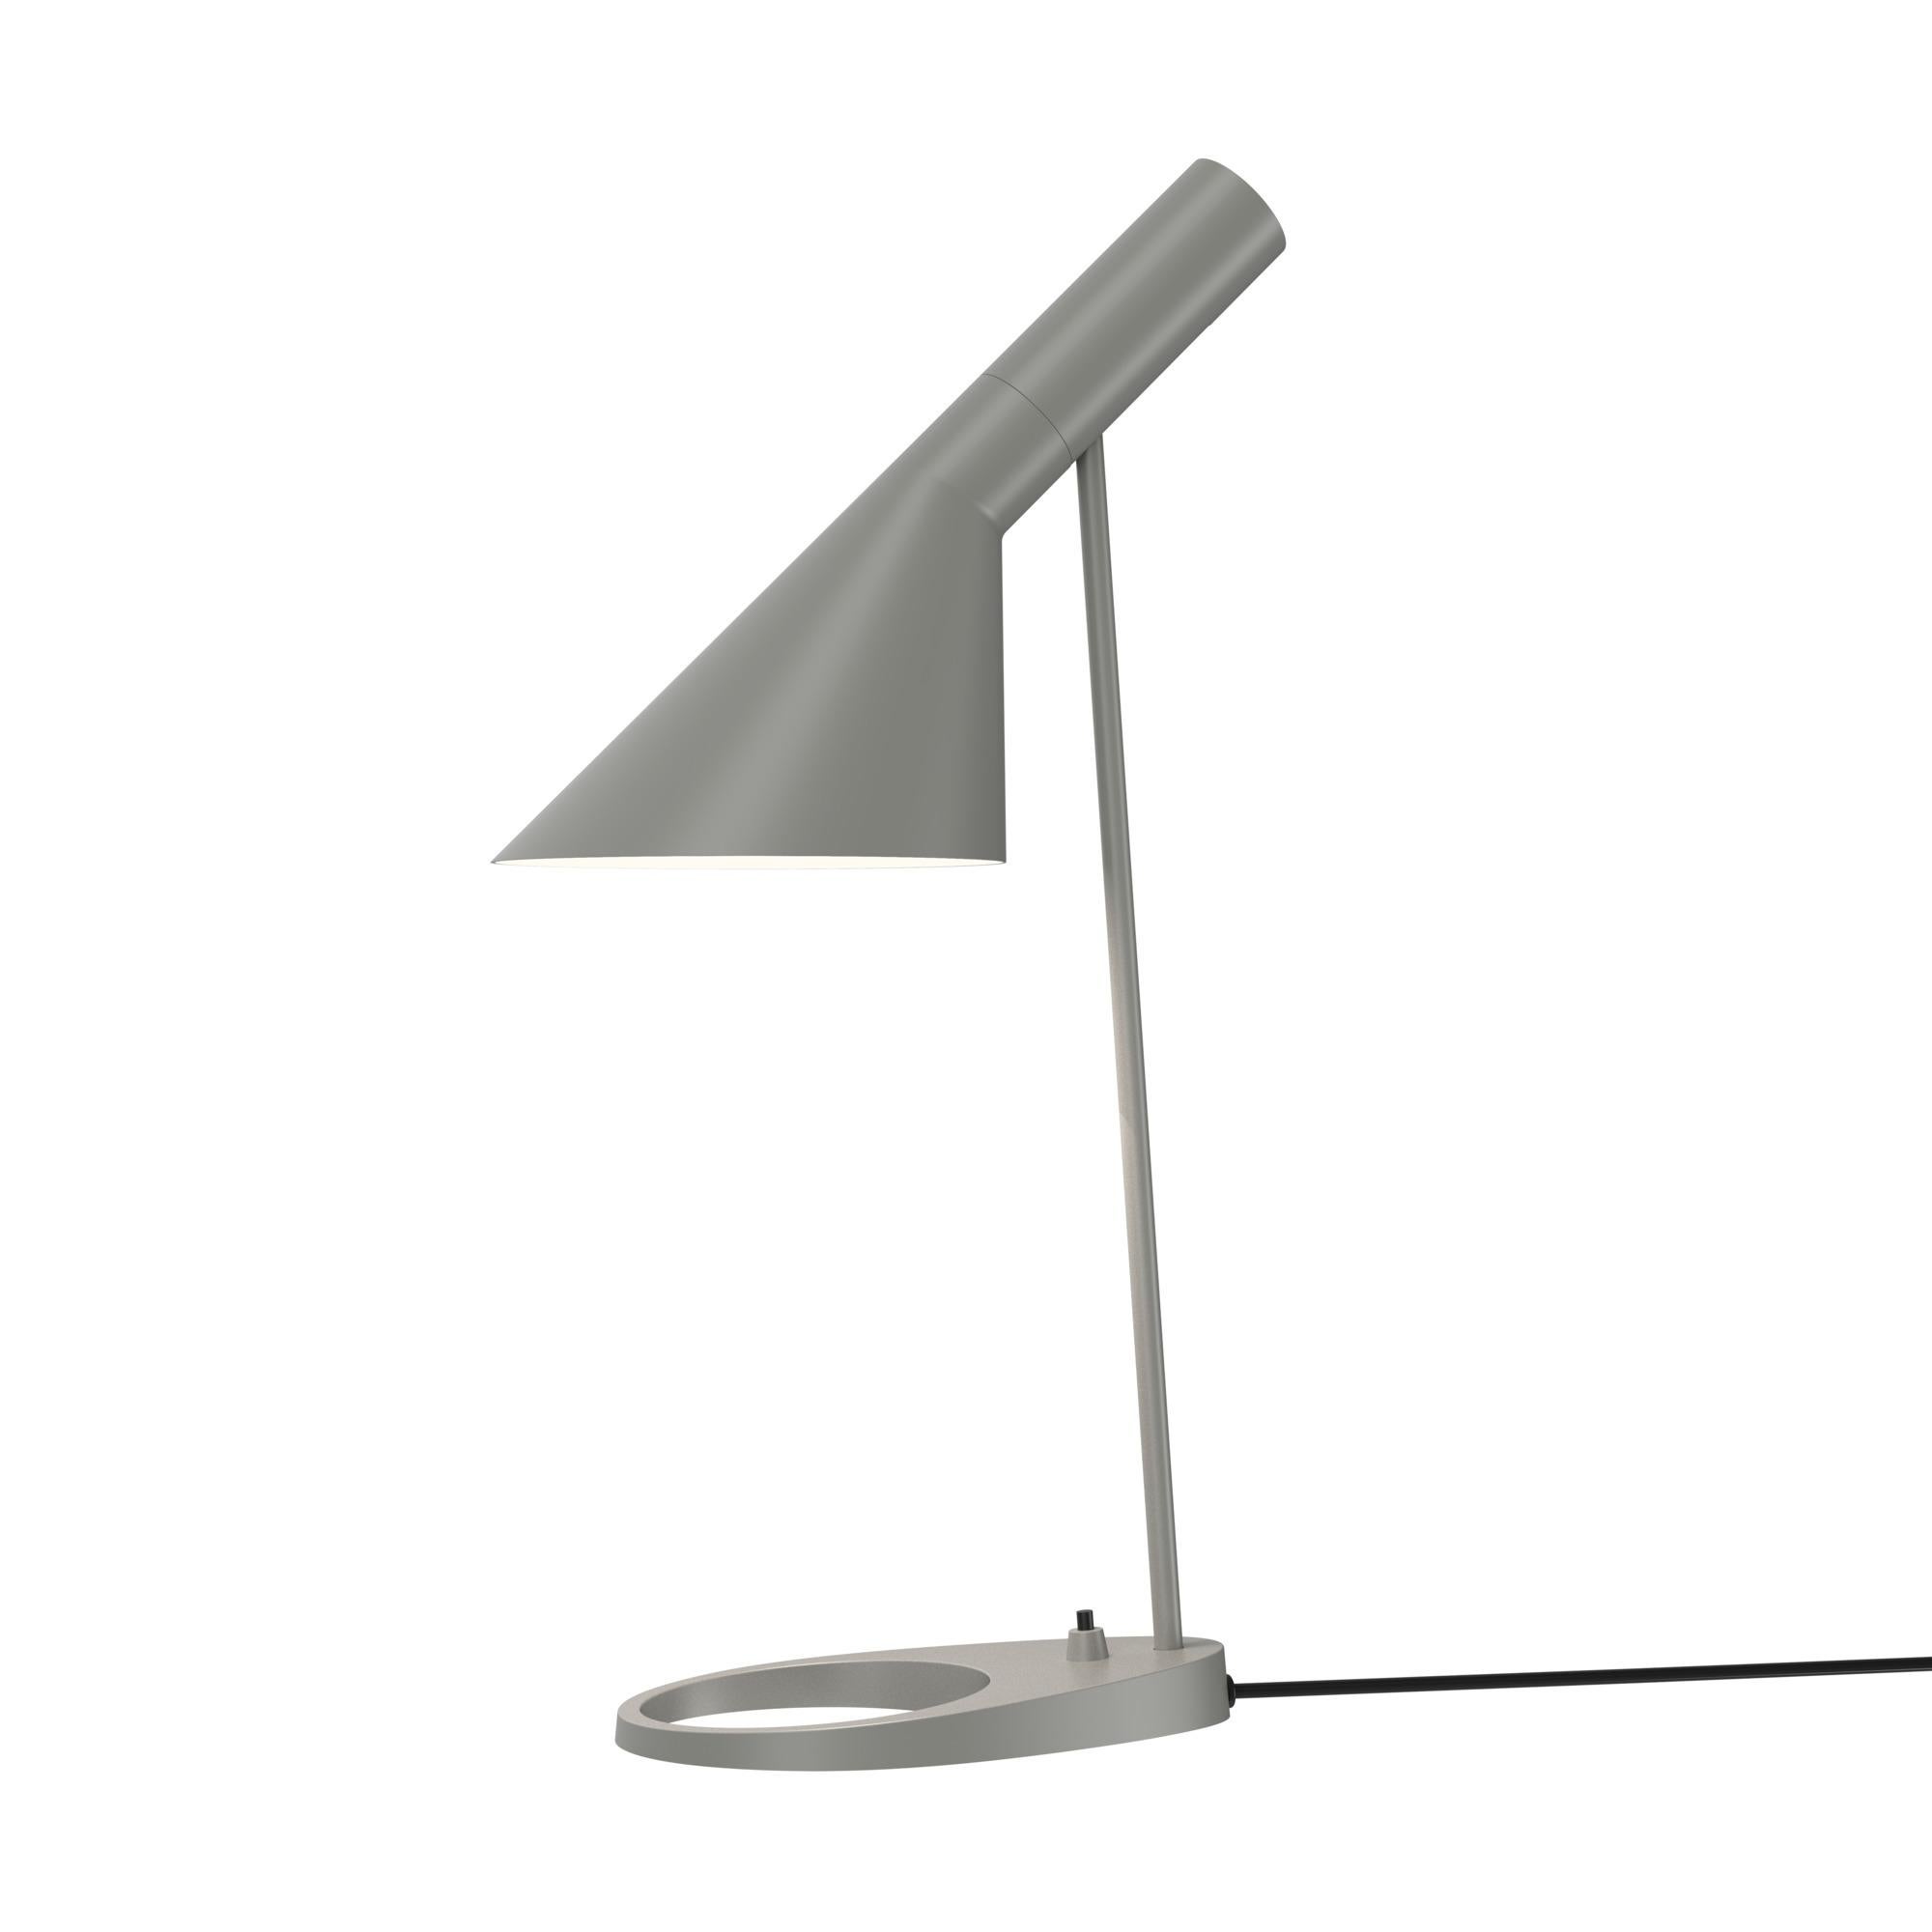 Arne Jacobsen AJ Table Lamp in Pale Petroleum for Louis Poulsen For Sale 6